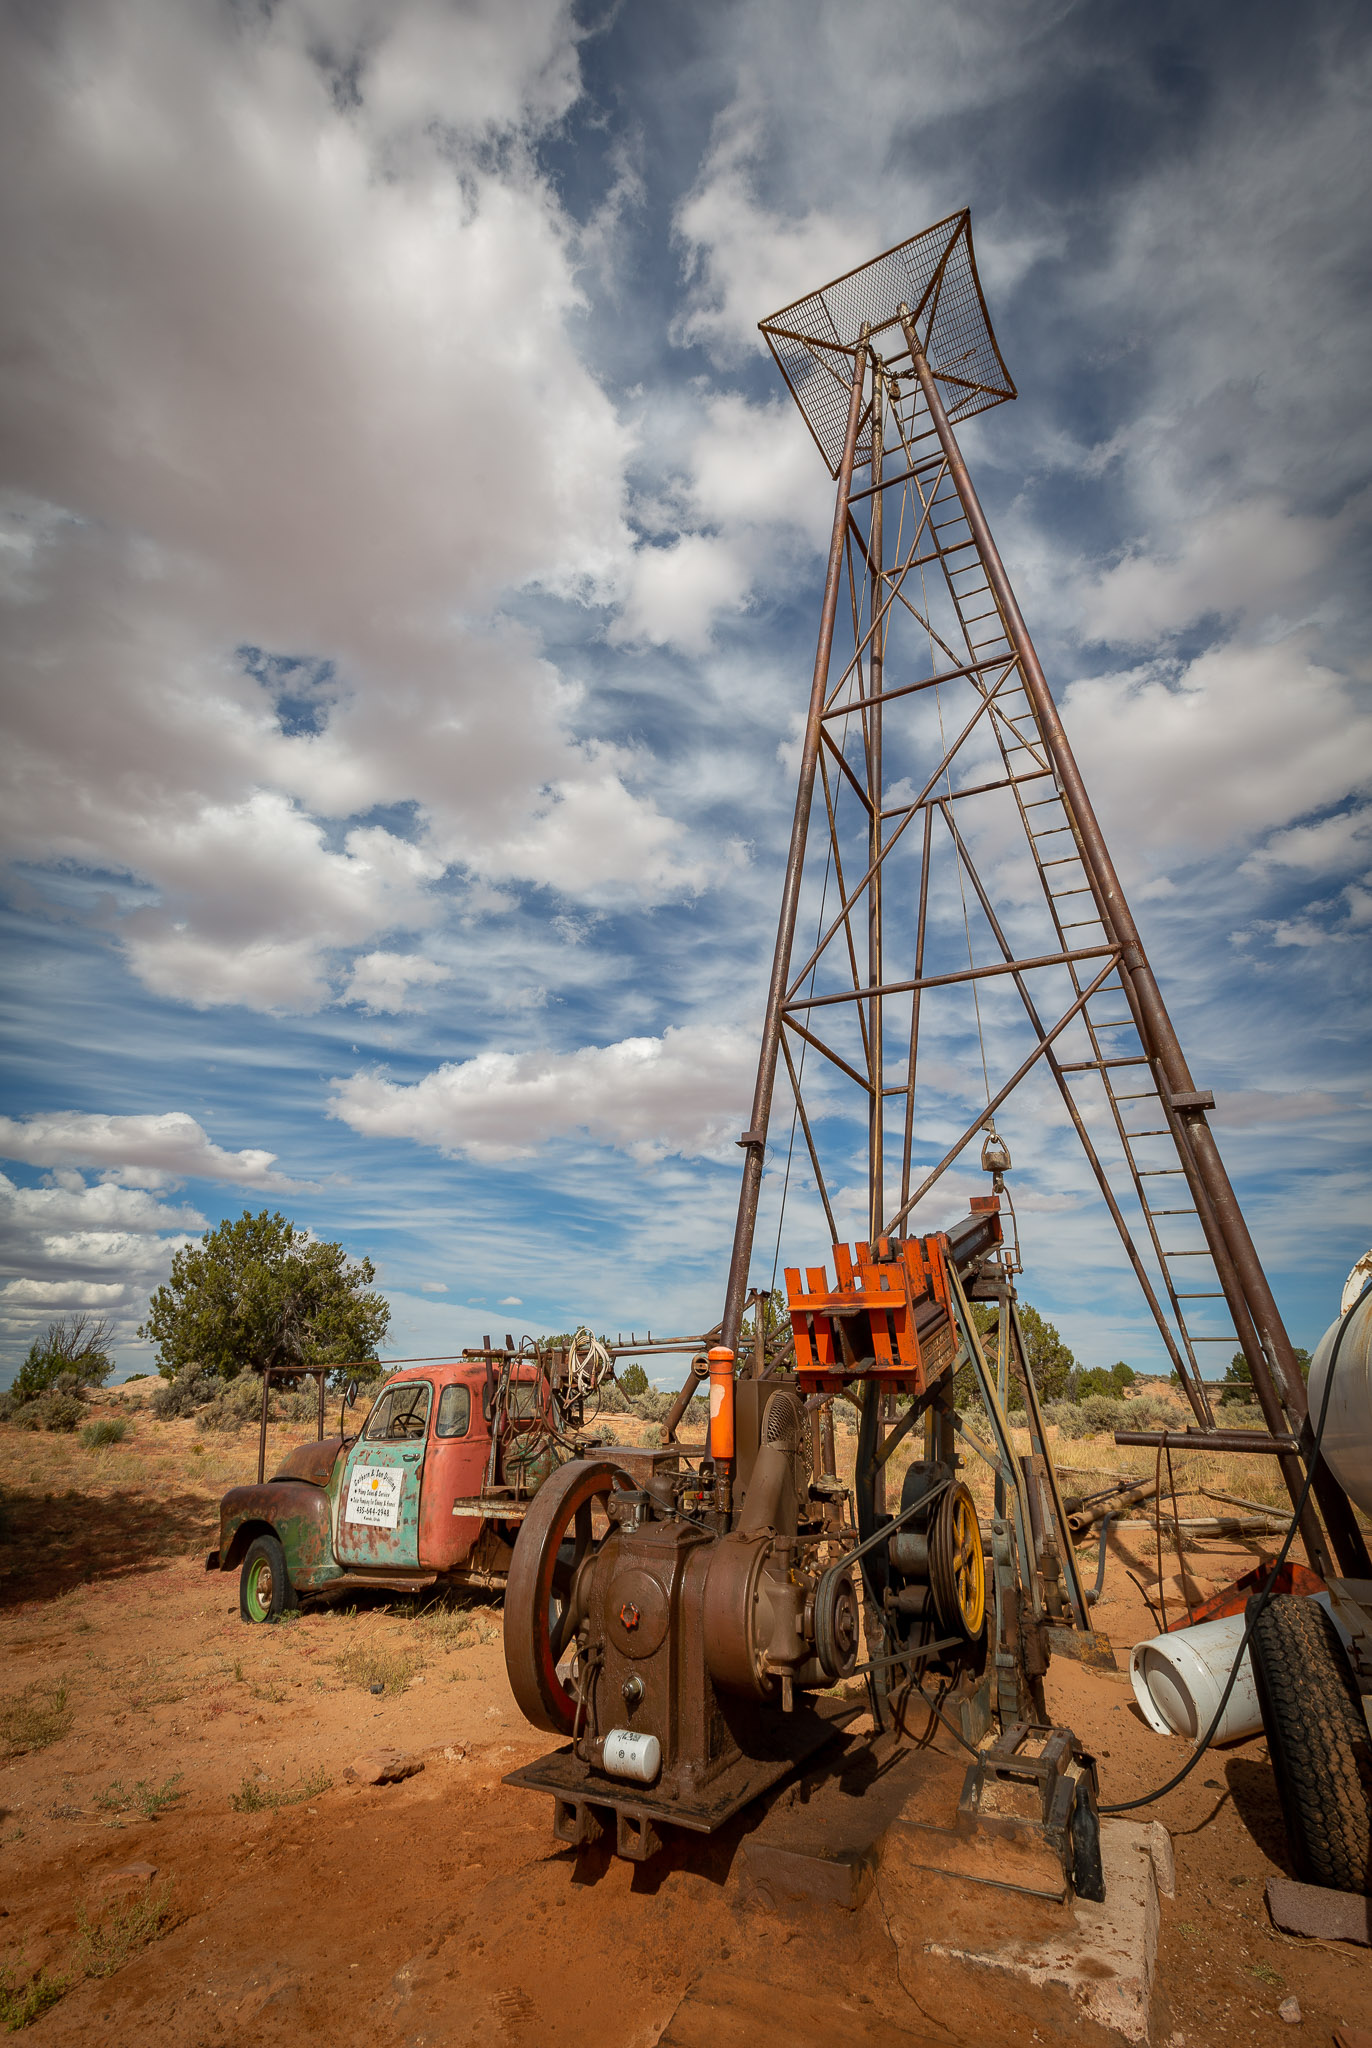 Drilling rig at Poverty Flats